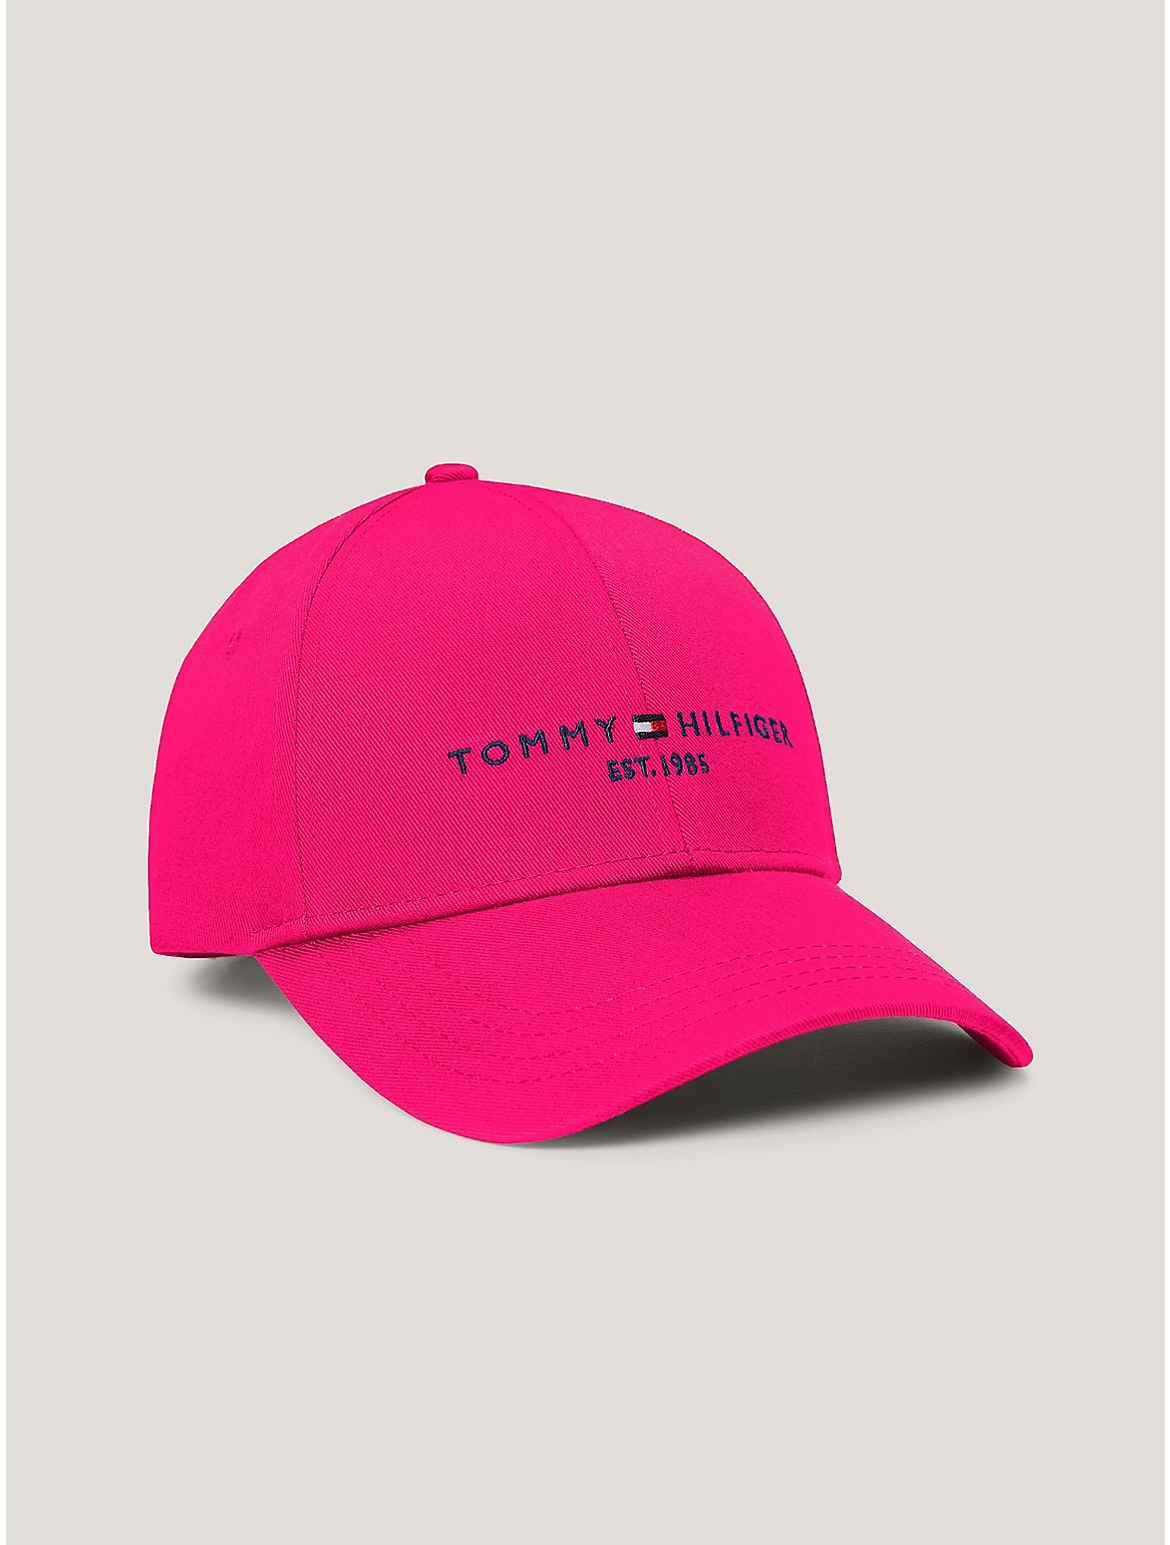 Tommy Hilfiger Men's Hilfiger Baseball Cap - Pink